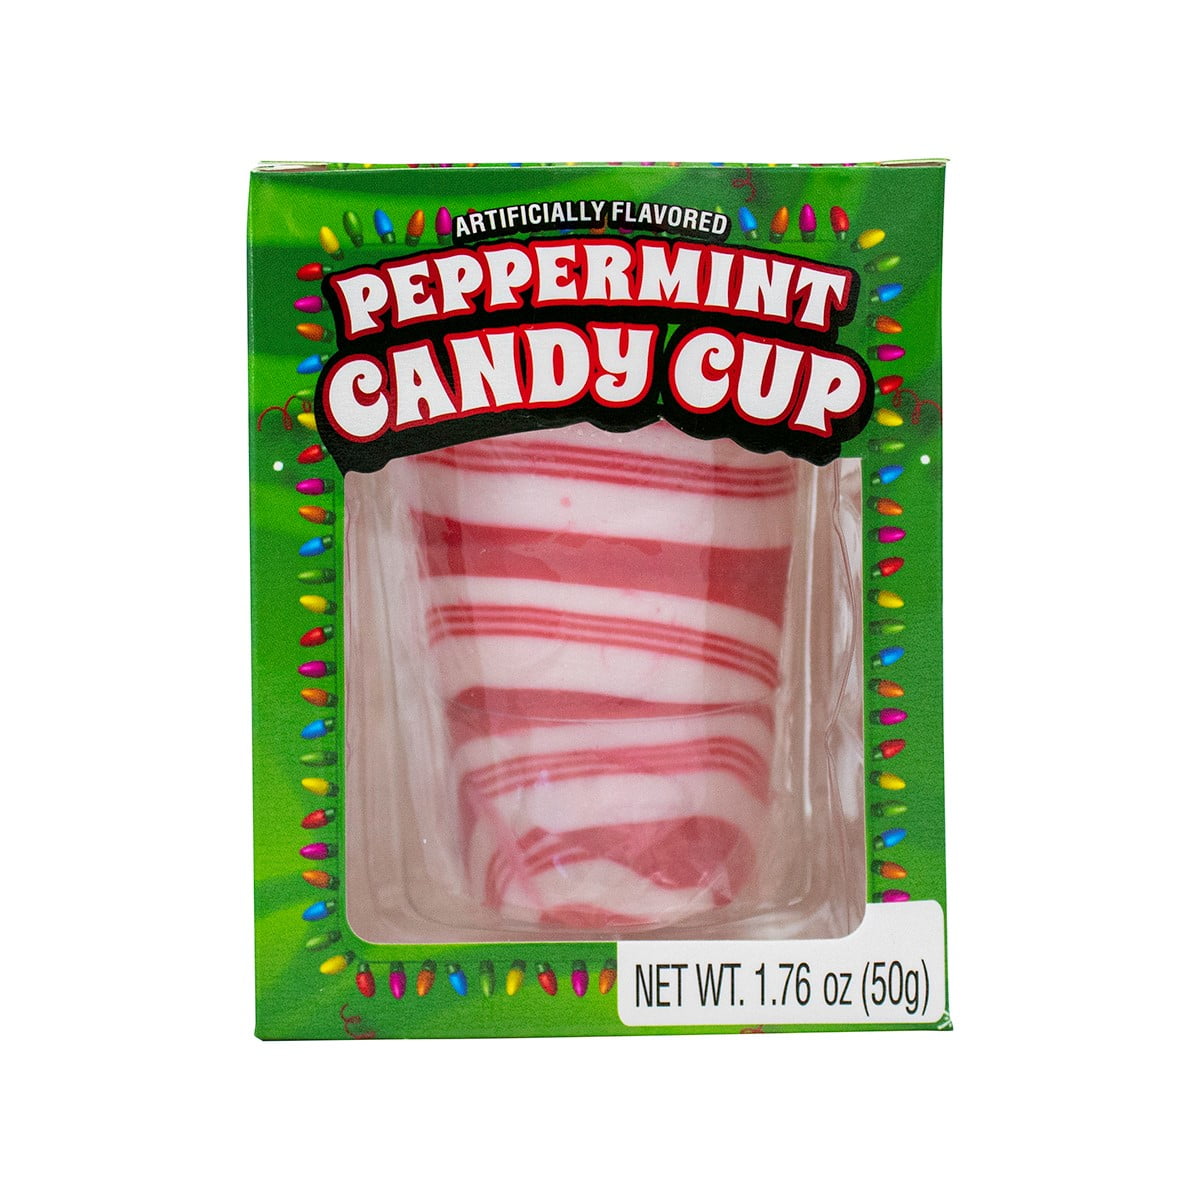 CHRISTMAS CANDY CANES & PEPPERMINTS' mug - 5 dollar mugs (5dms) ($5 mugs)